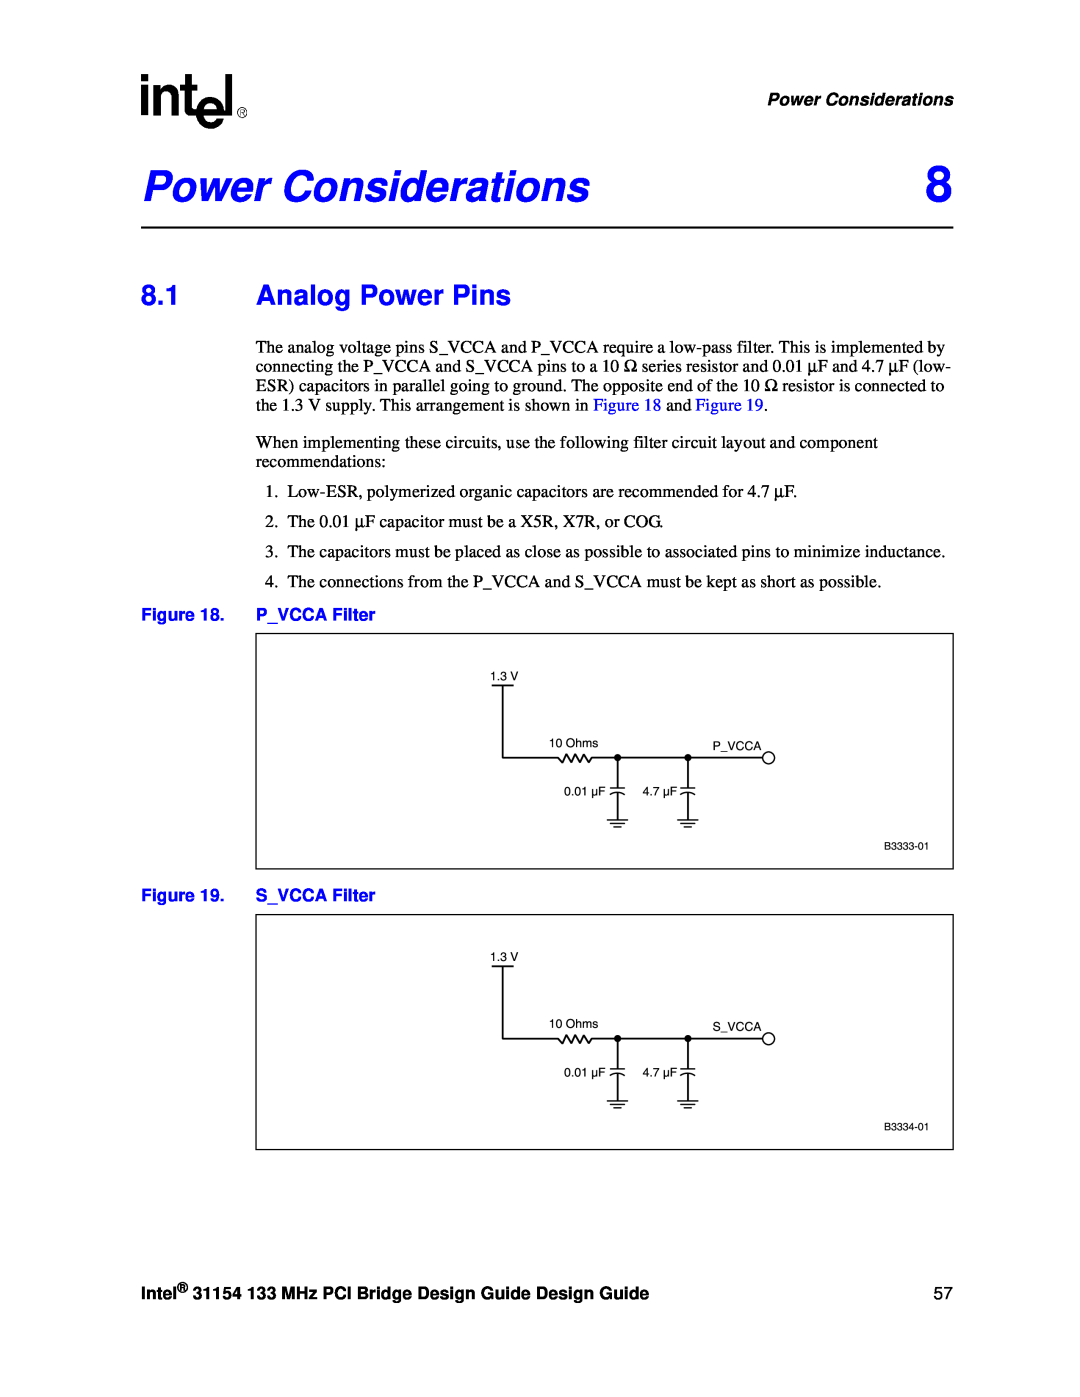 Intel manual Power Considerations, Analog Power Pins, Intel 31154 133 MHz PCI Bridge Design Guide Design Guide 